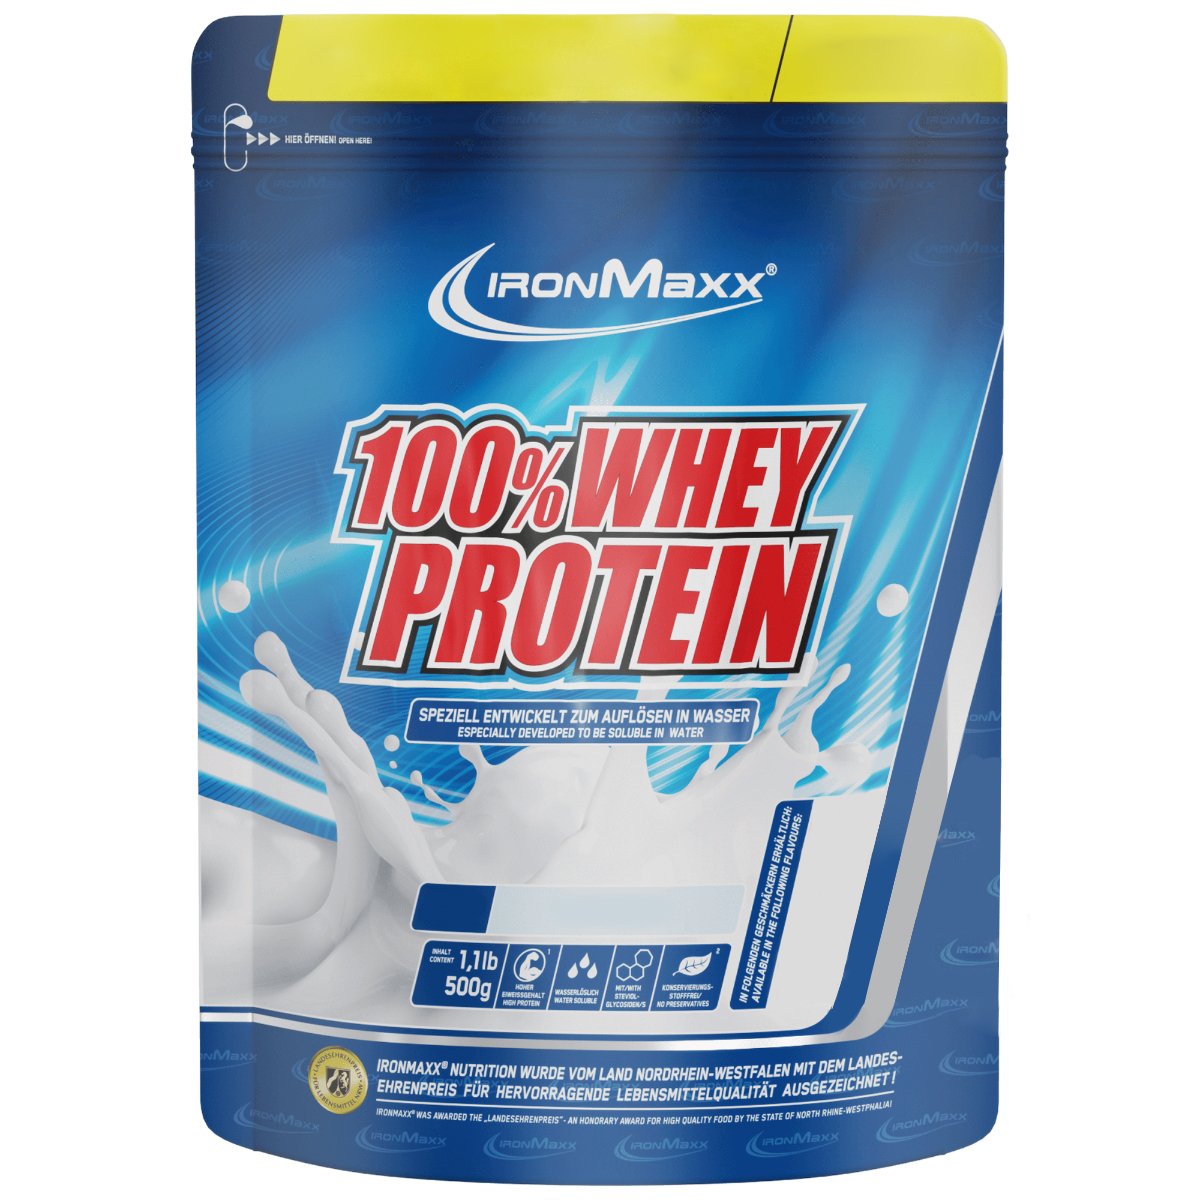 Протеин Ironmaxx 100% Whey Protein, 500 грамм Белый шоколад-кокос,  мл, IronMaxx. Протеин. Набор массы Восстановление Антикатаболические свойства 